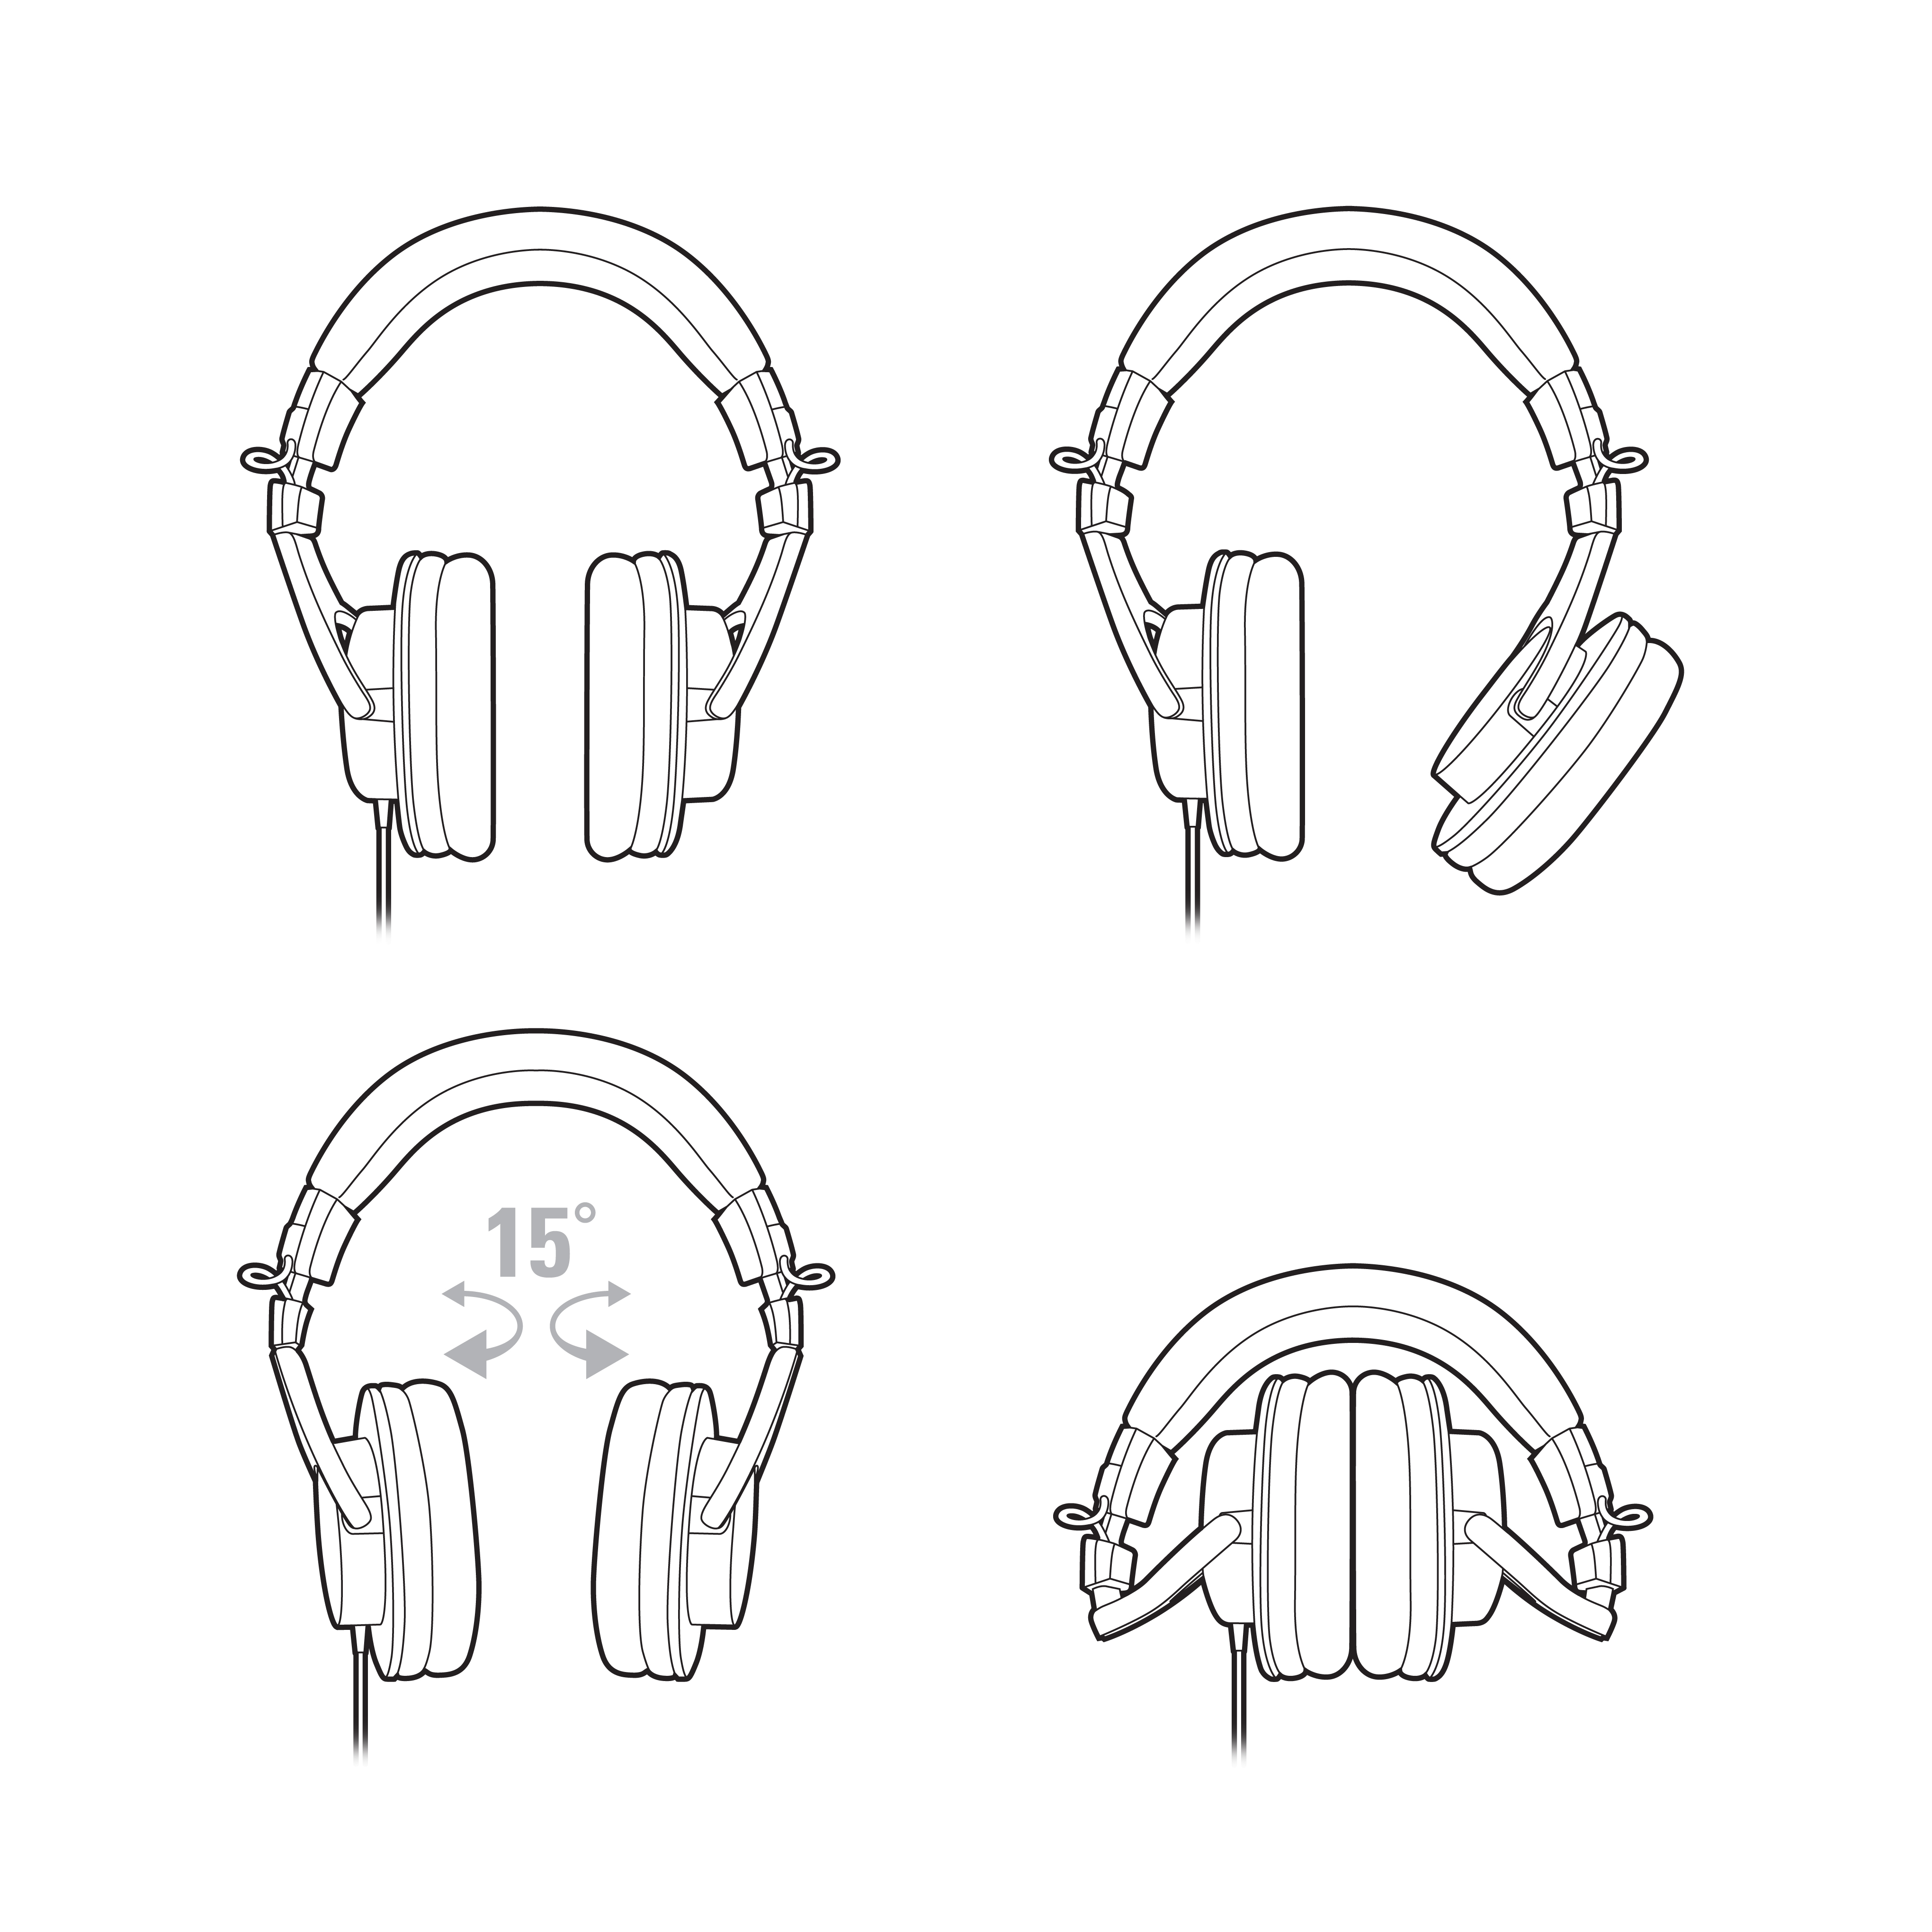 Audio Technica ATH-M30x,m30x,headphone monitor,close back headphone,หูฟัง monitor,sound engineer,mixing,studio tracking